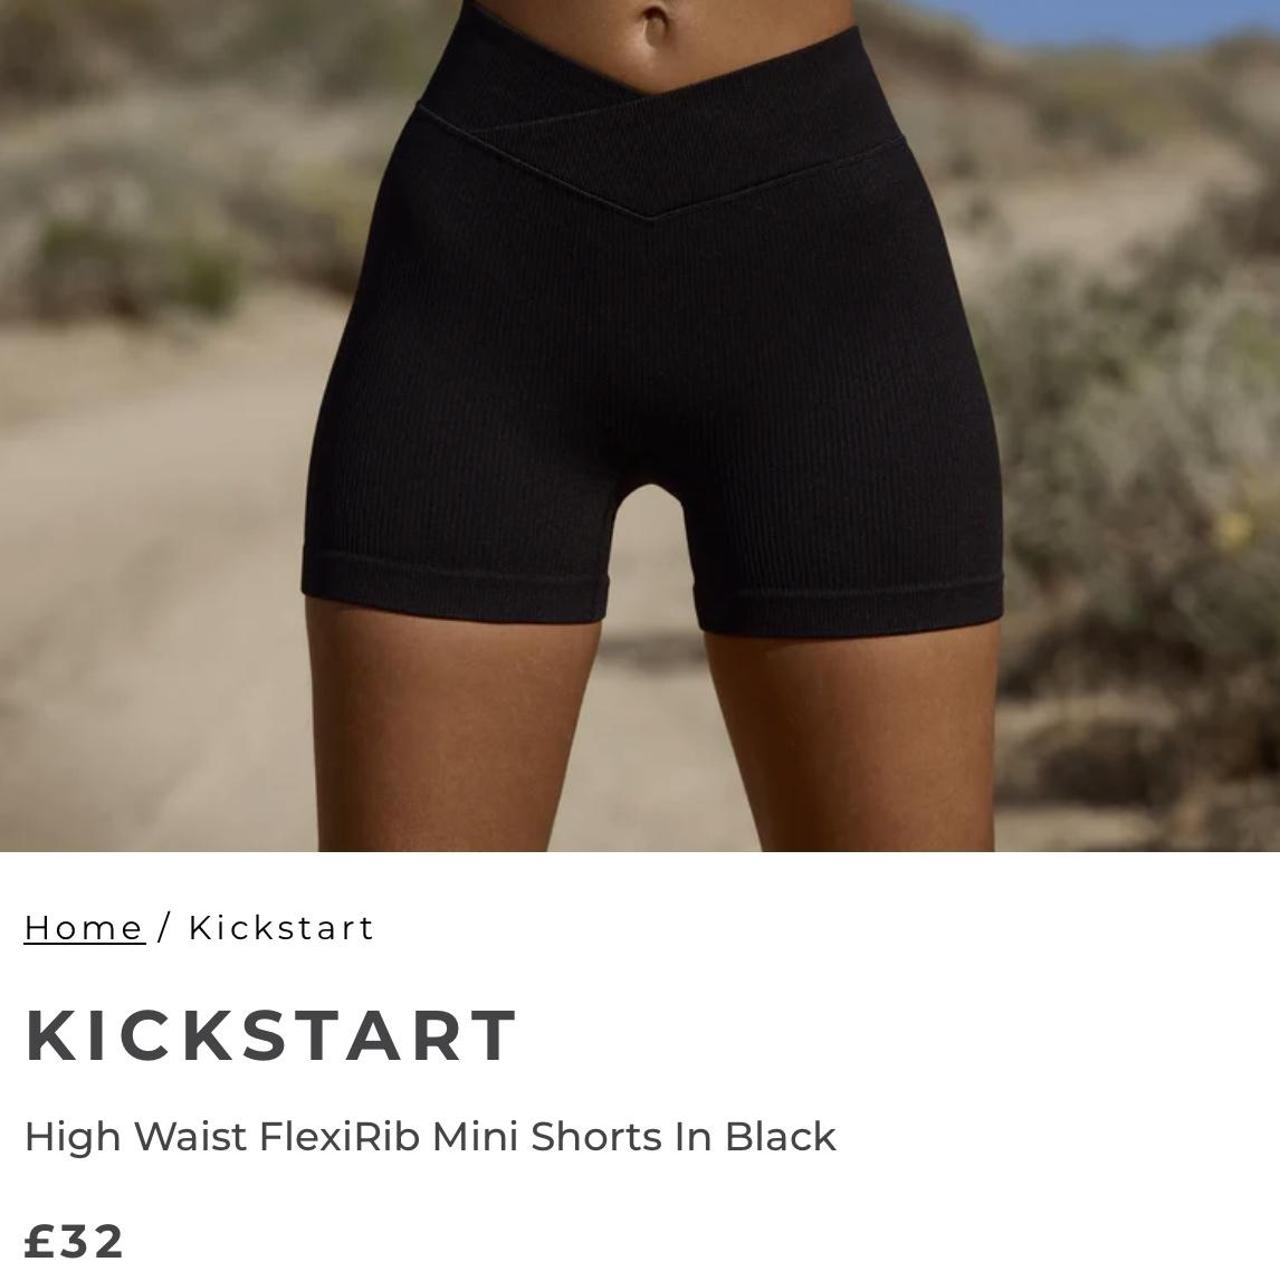 Kickstart - High Waist FlexiRib Mini Shorts in Black